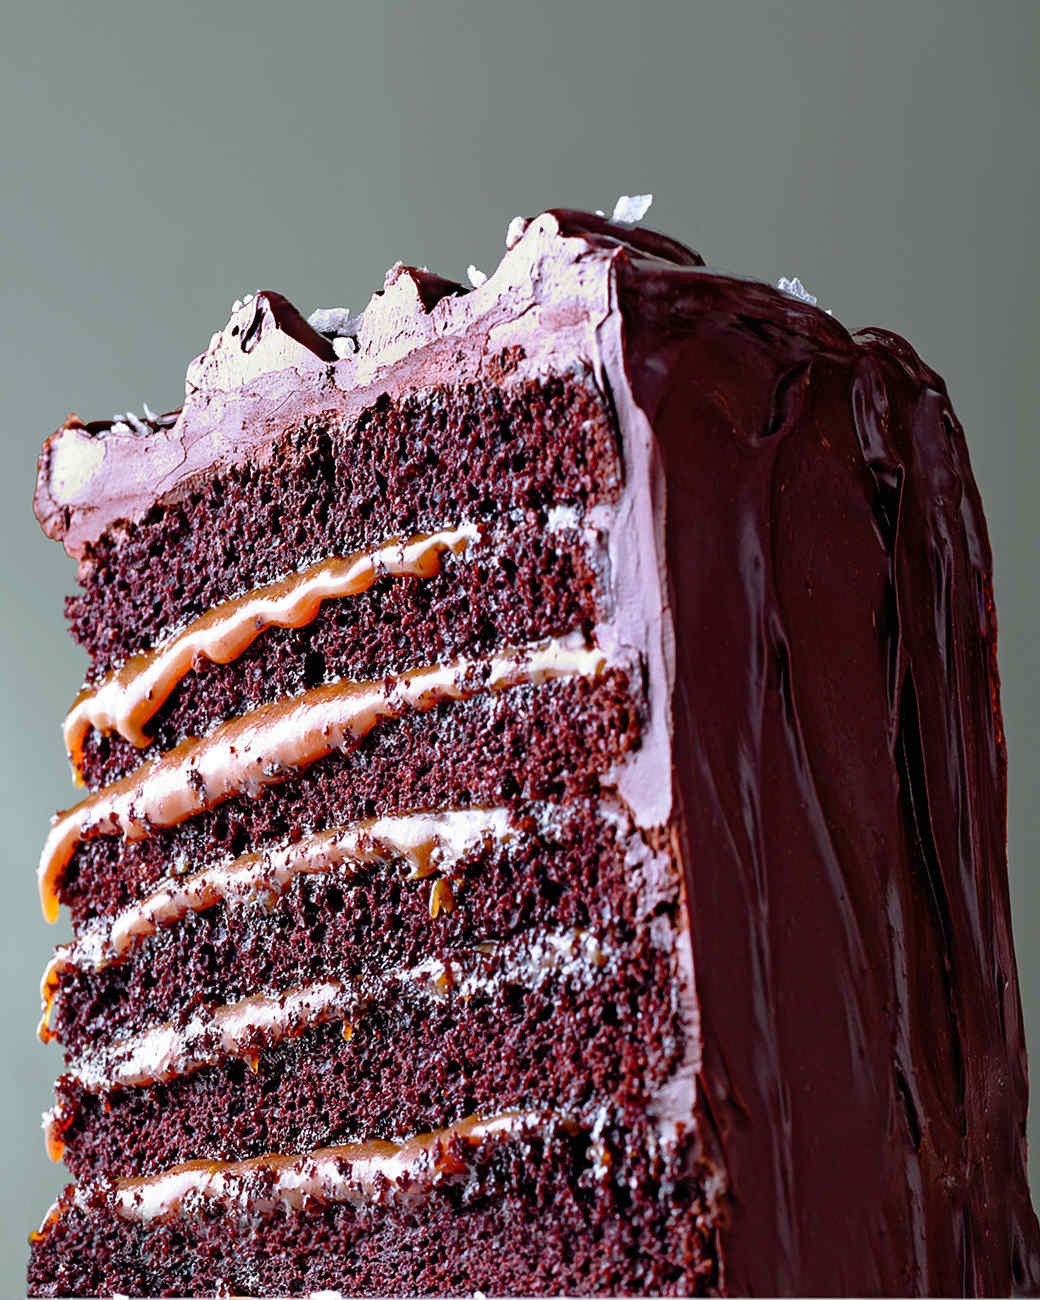 Martha Stewart Chocolate Cake Inspirational Thanksgiving Desserts Of Martha Stewart Chocolate Cake 